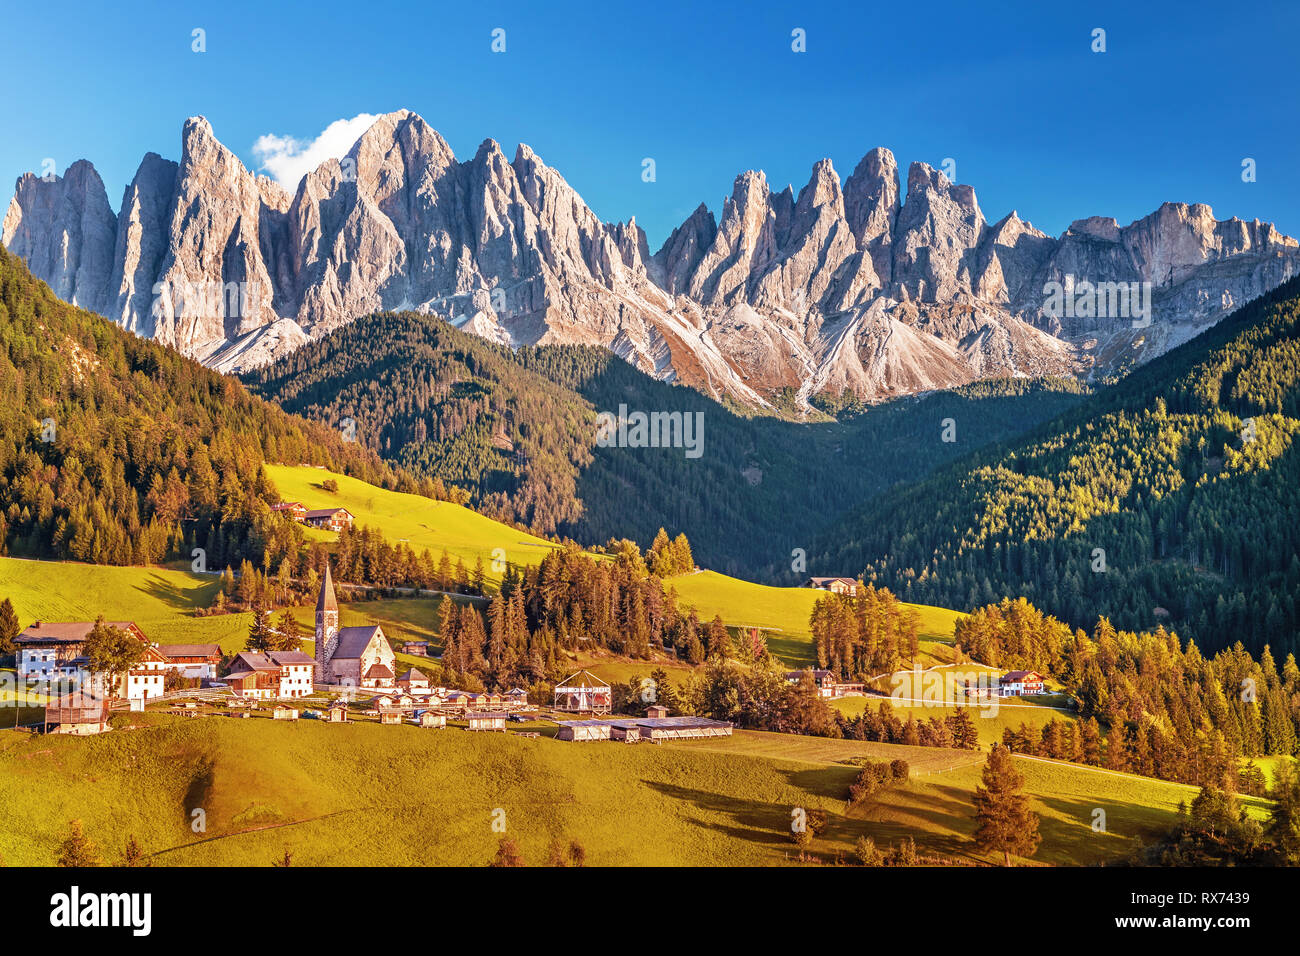 Berühmte alpine Ort Santa Maddalena Dorf mit magischen Dolomiten Berge im Hintergrund, Val di Funes Tal, Trentino Alto Adige, Italien Stockfoto